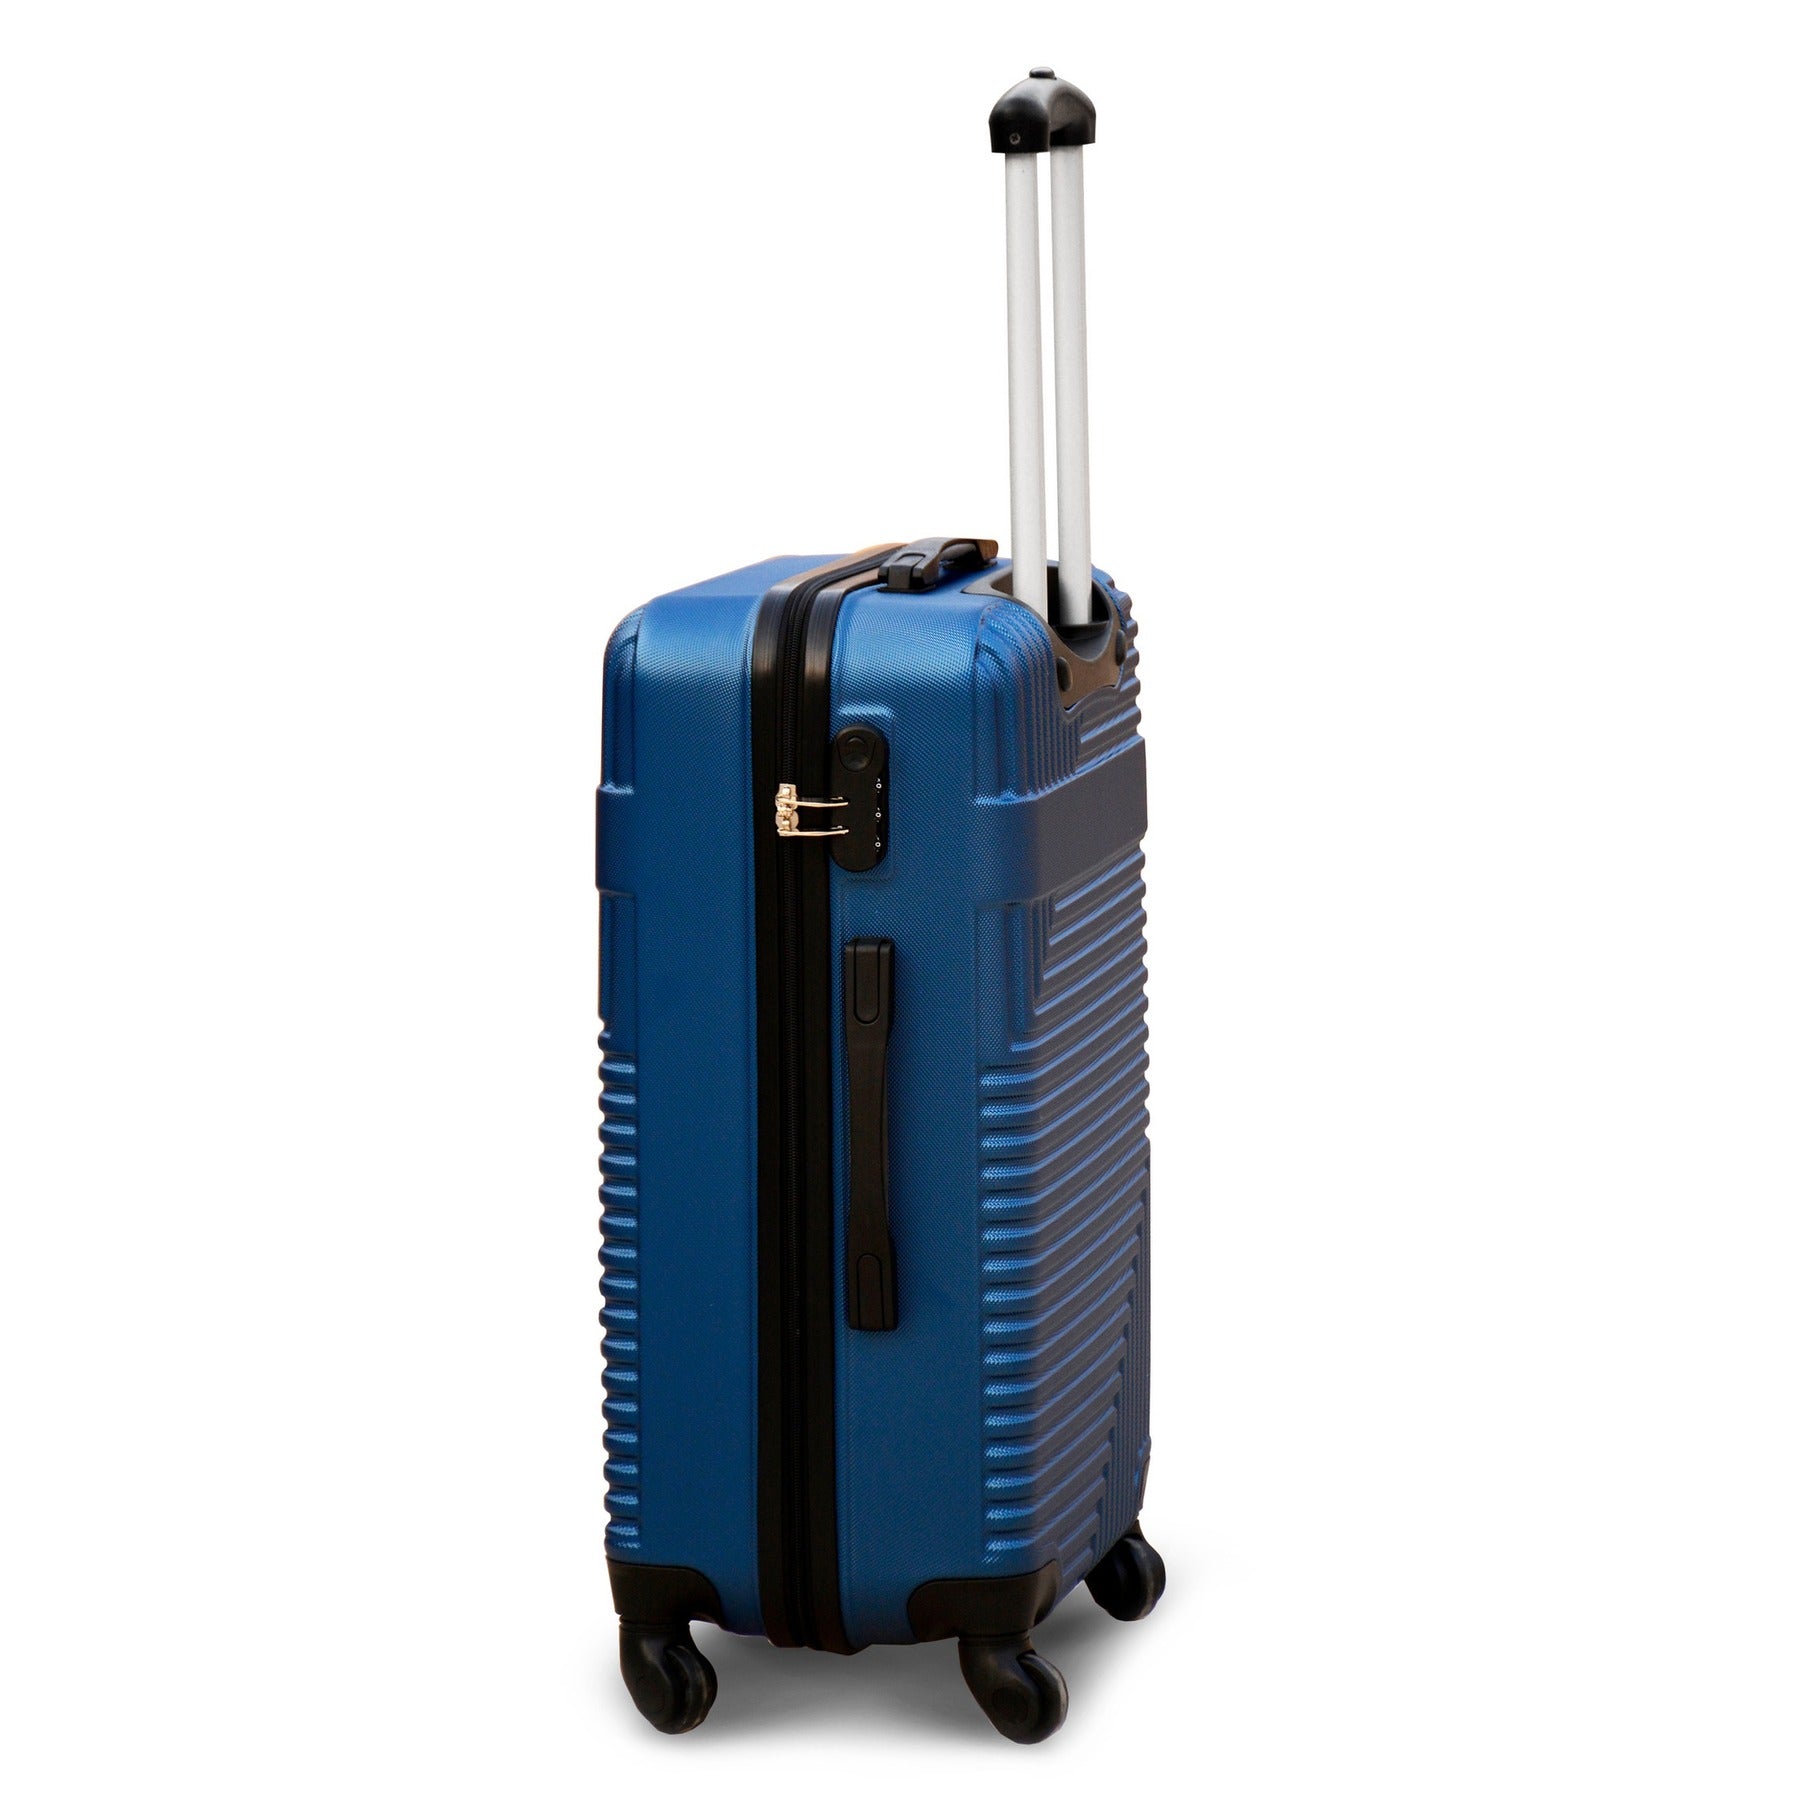 32" Blue Travel Way ABS Lightweight Hard Case Luggage Bag